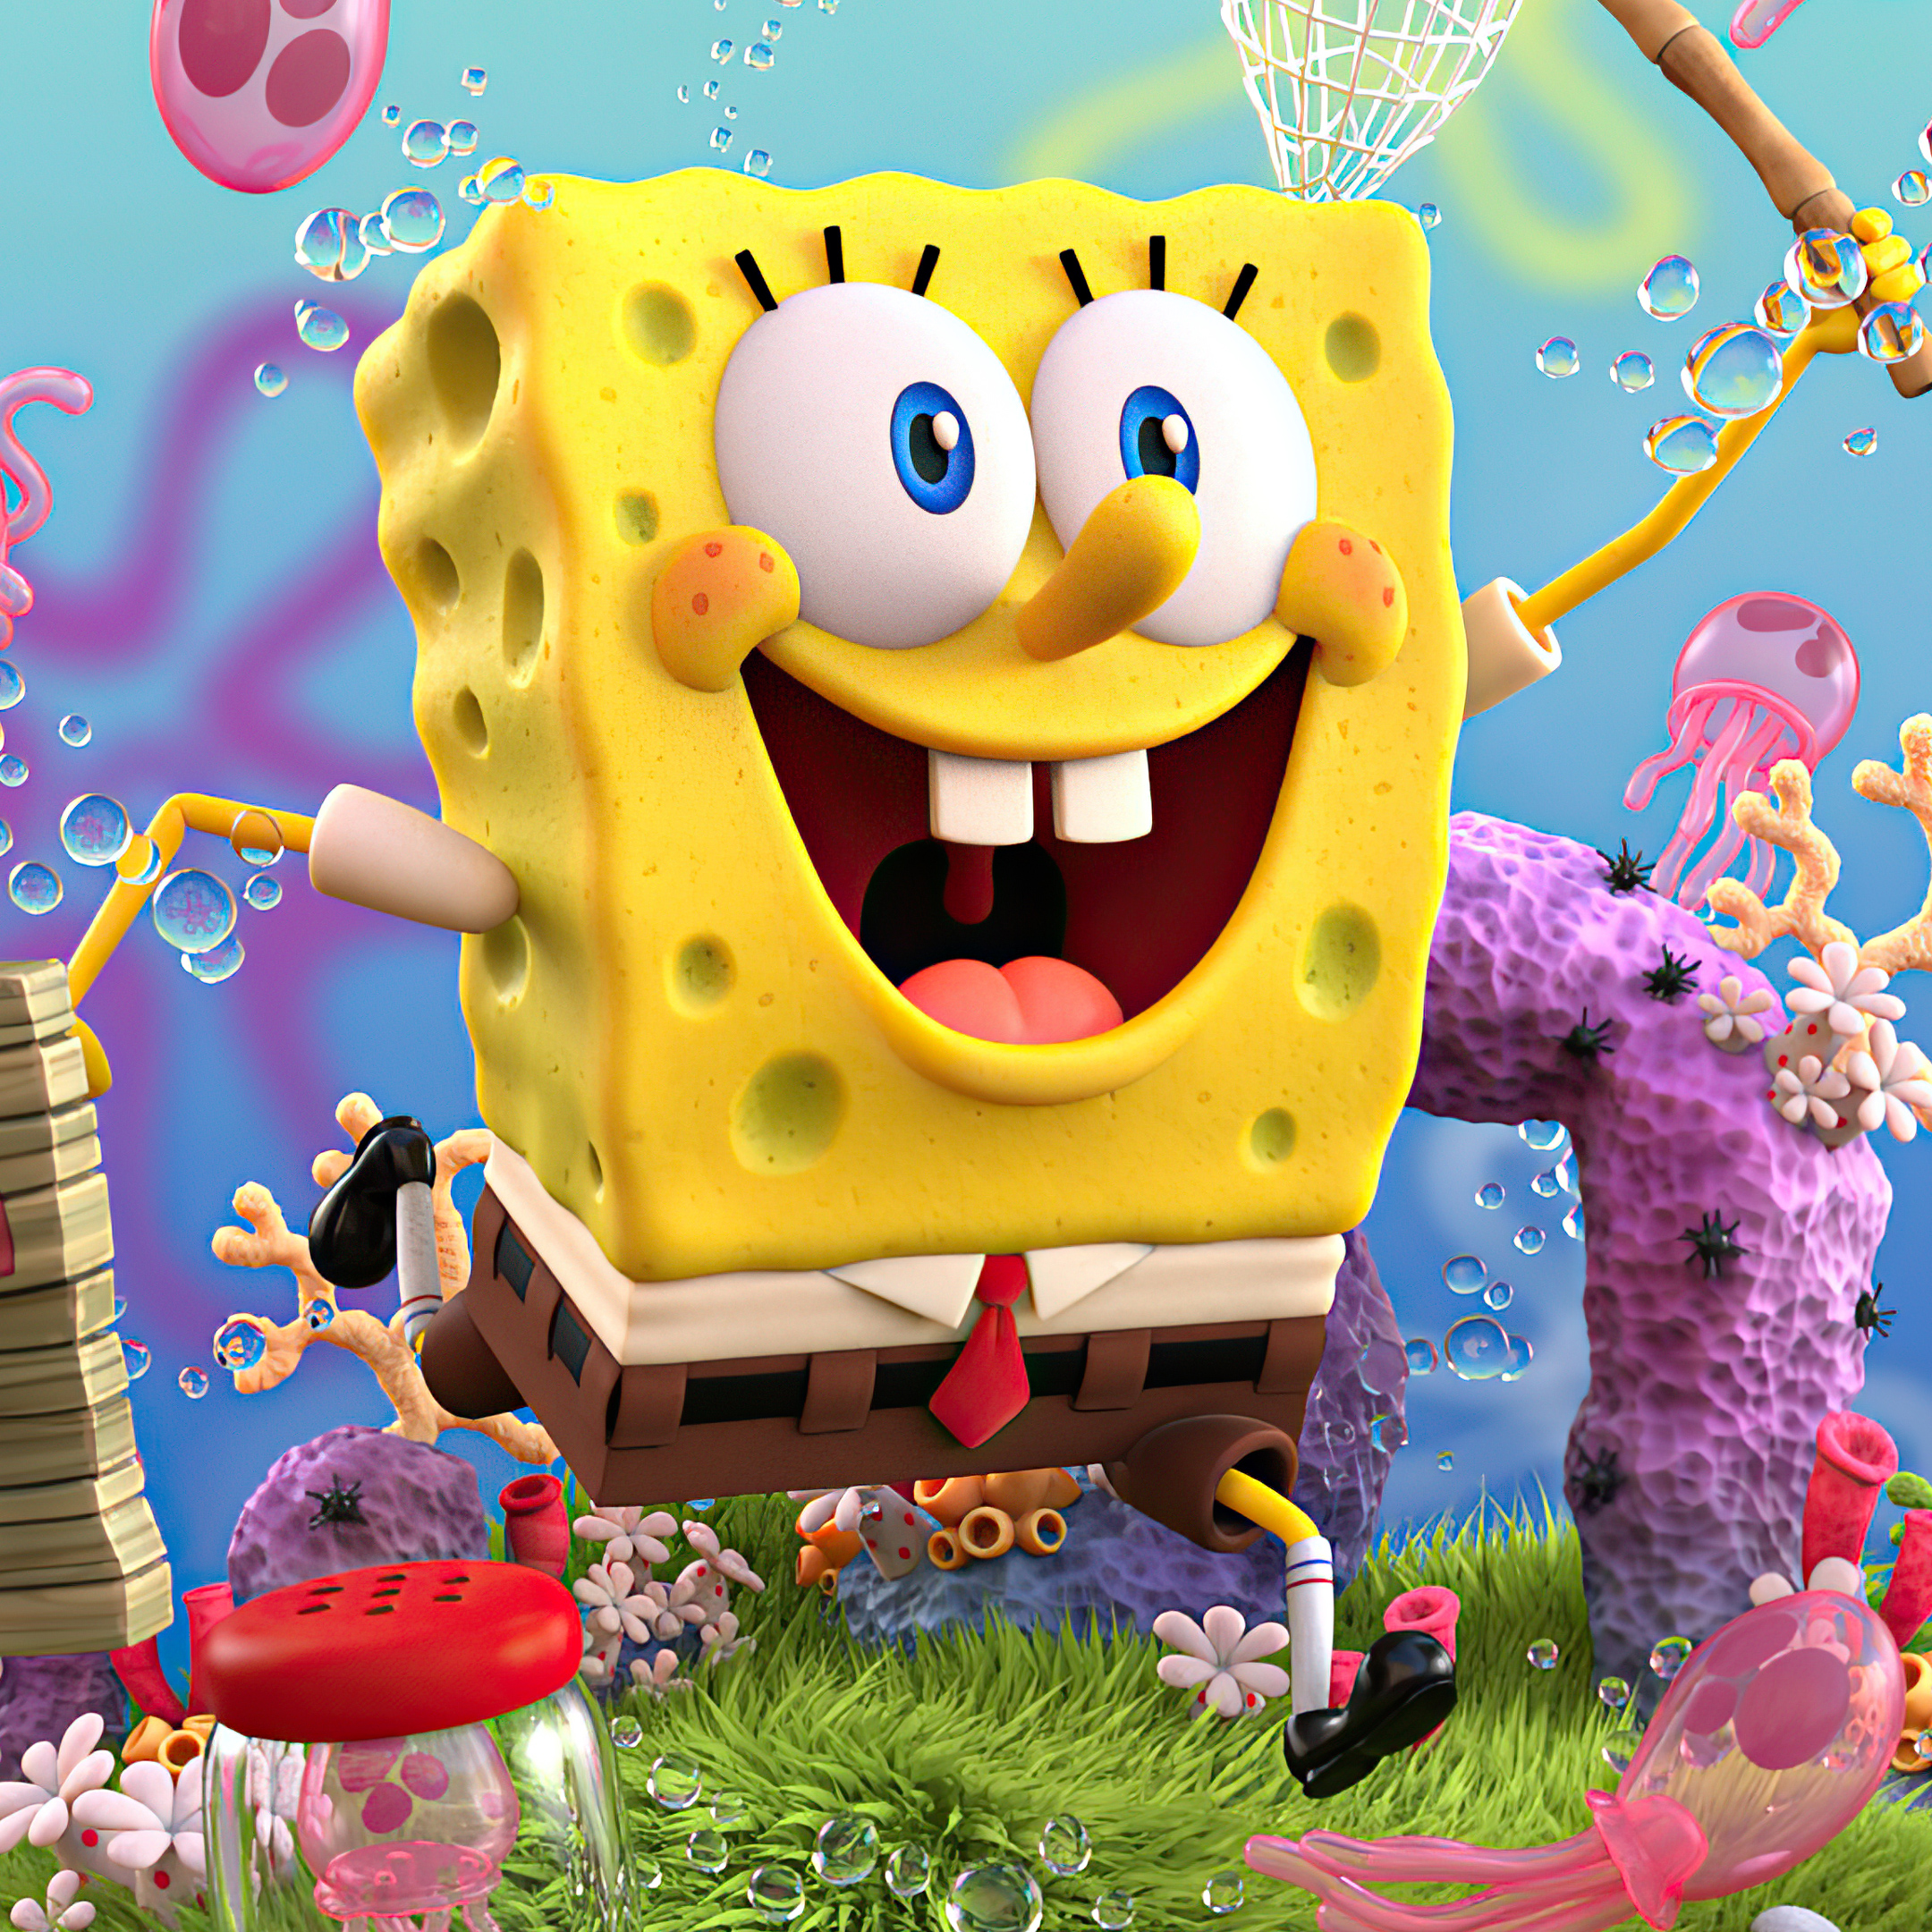 SpongeBob SquarePants AI Covers cover artwork